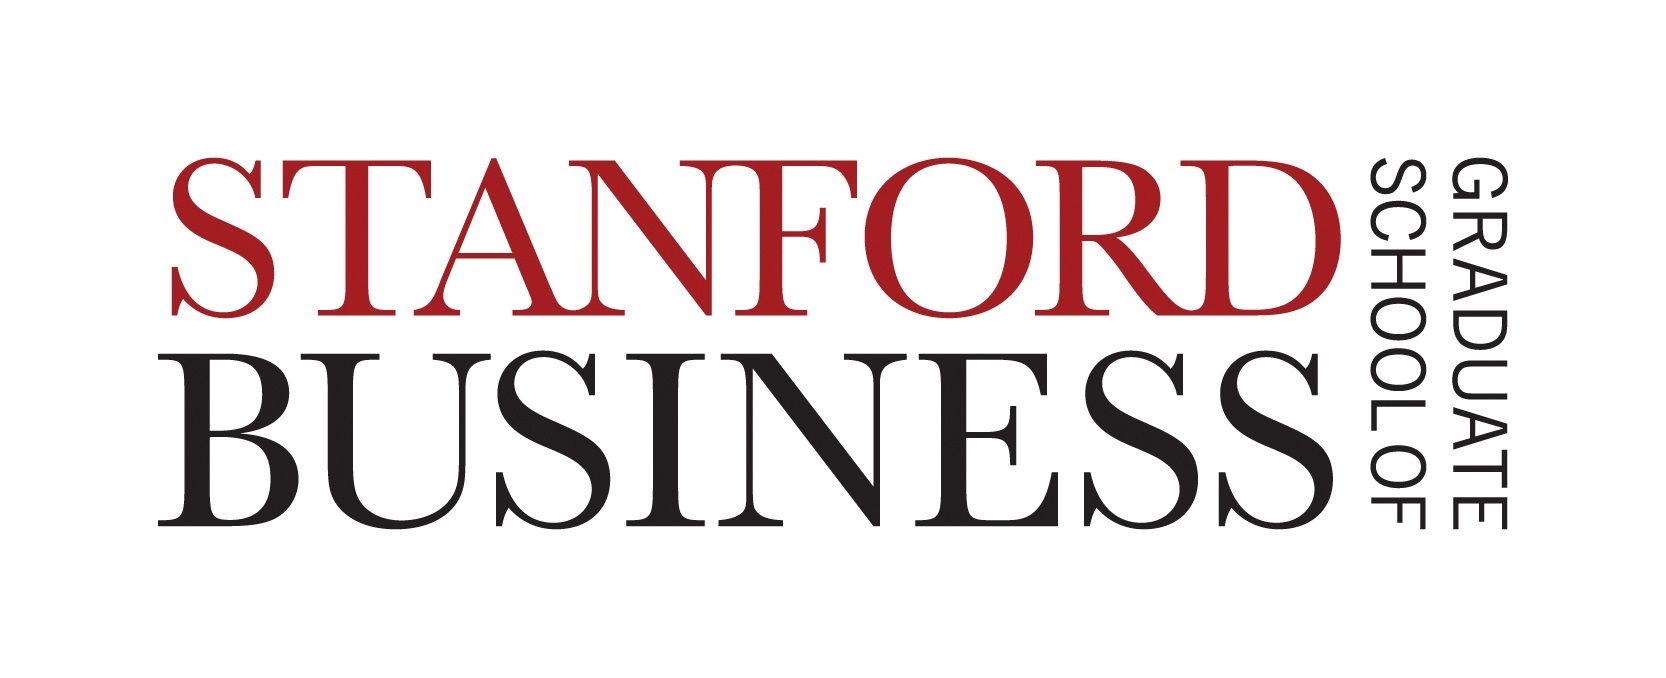 Stanford-Graduate-School-of-Business-logo_1559814627.jpg